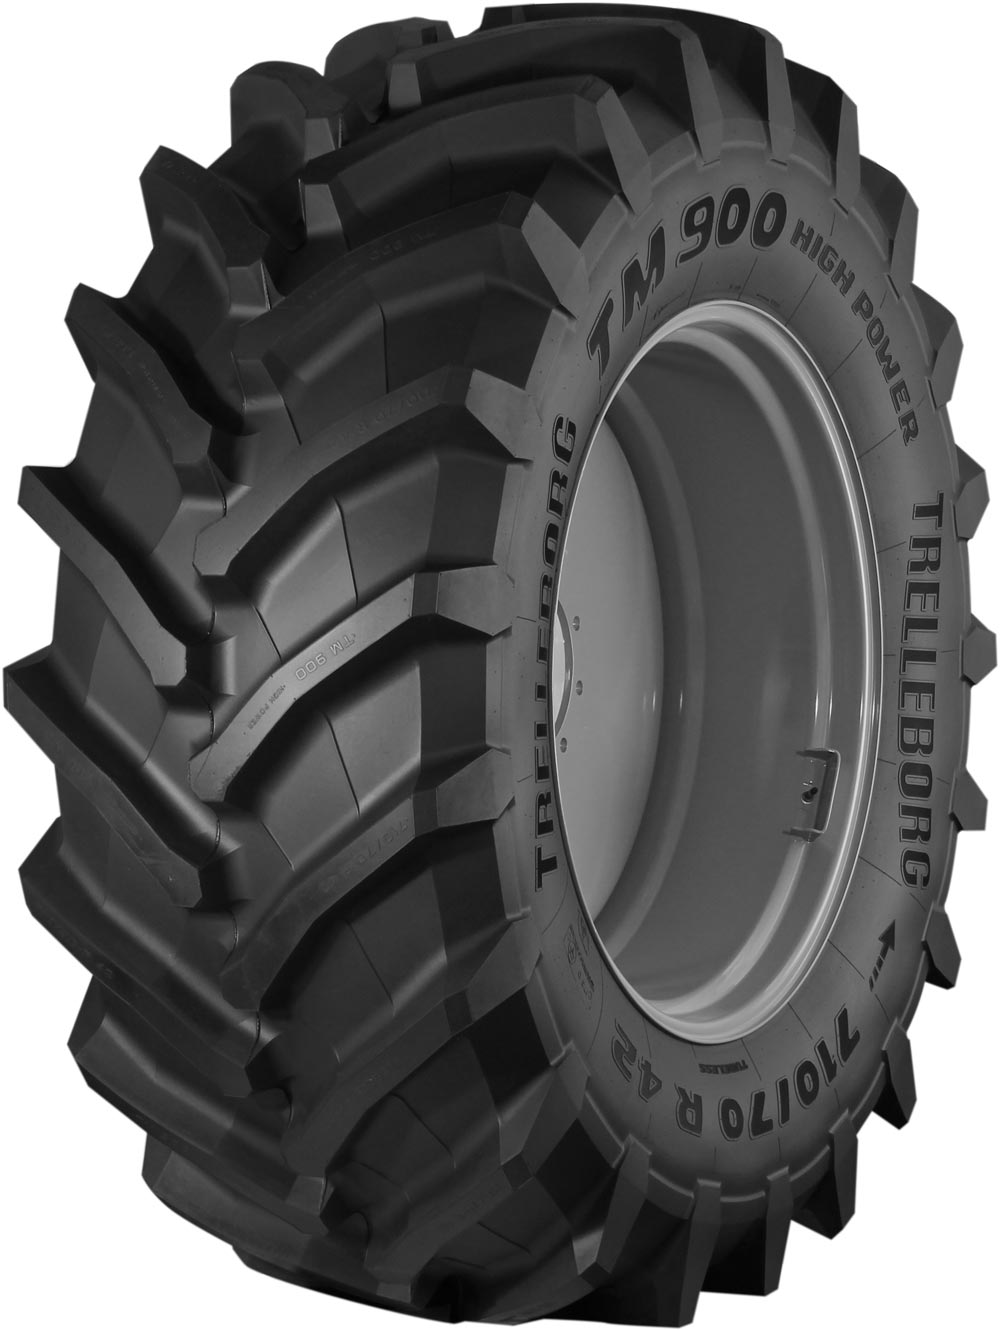 product_type-industrial_tires Trelleborg TM 900 HP TL 600/70 R30 158D